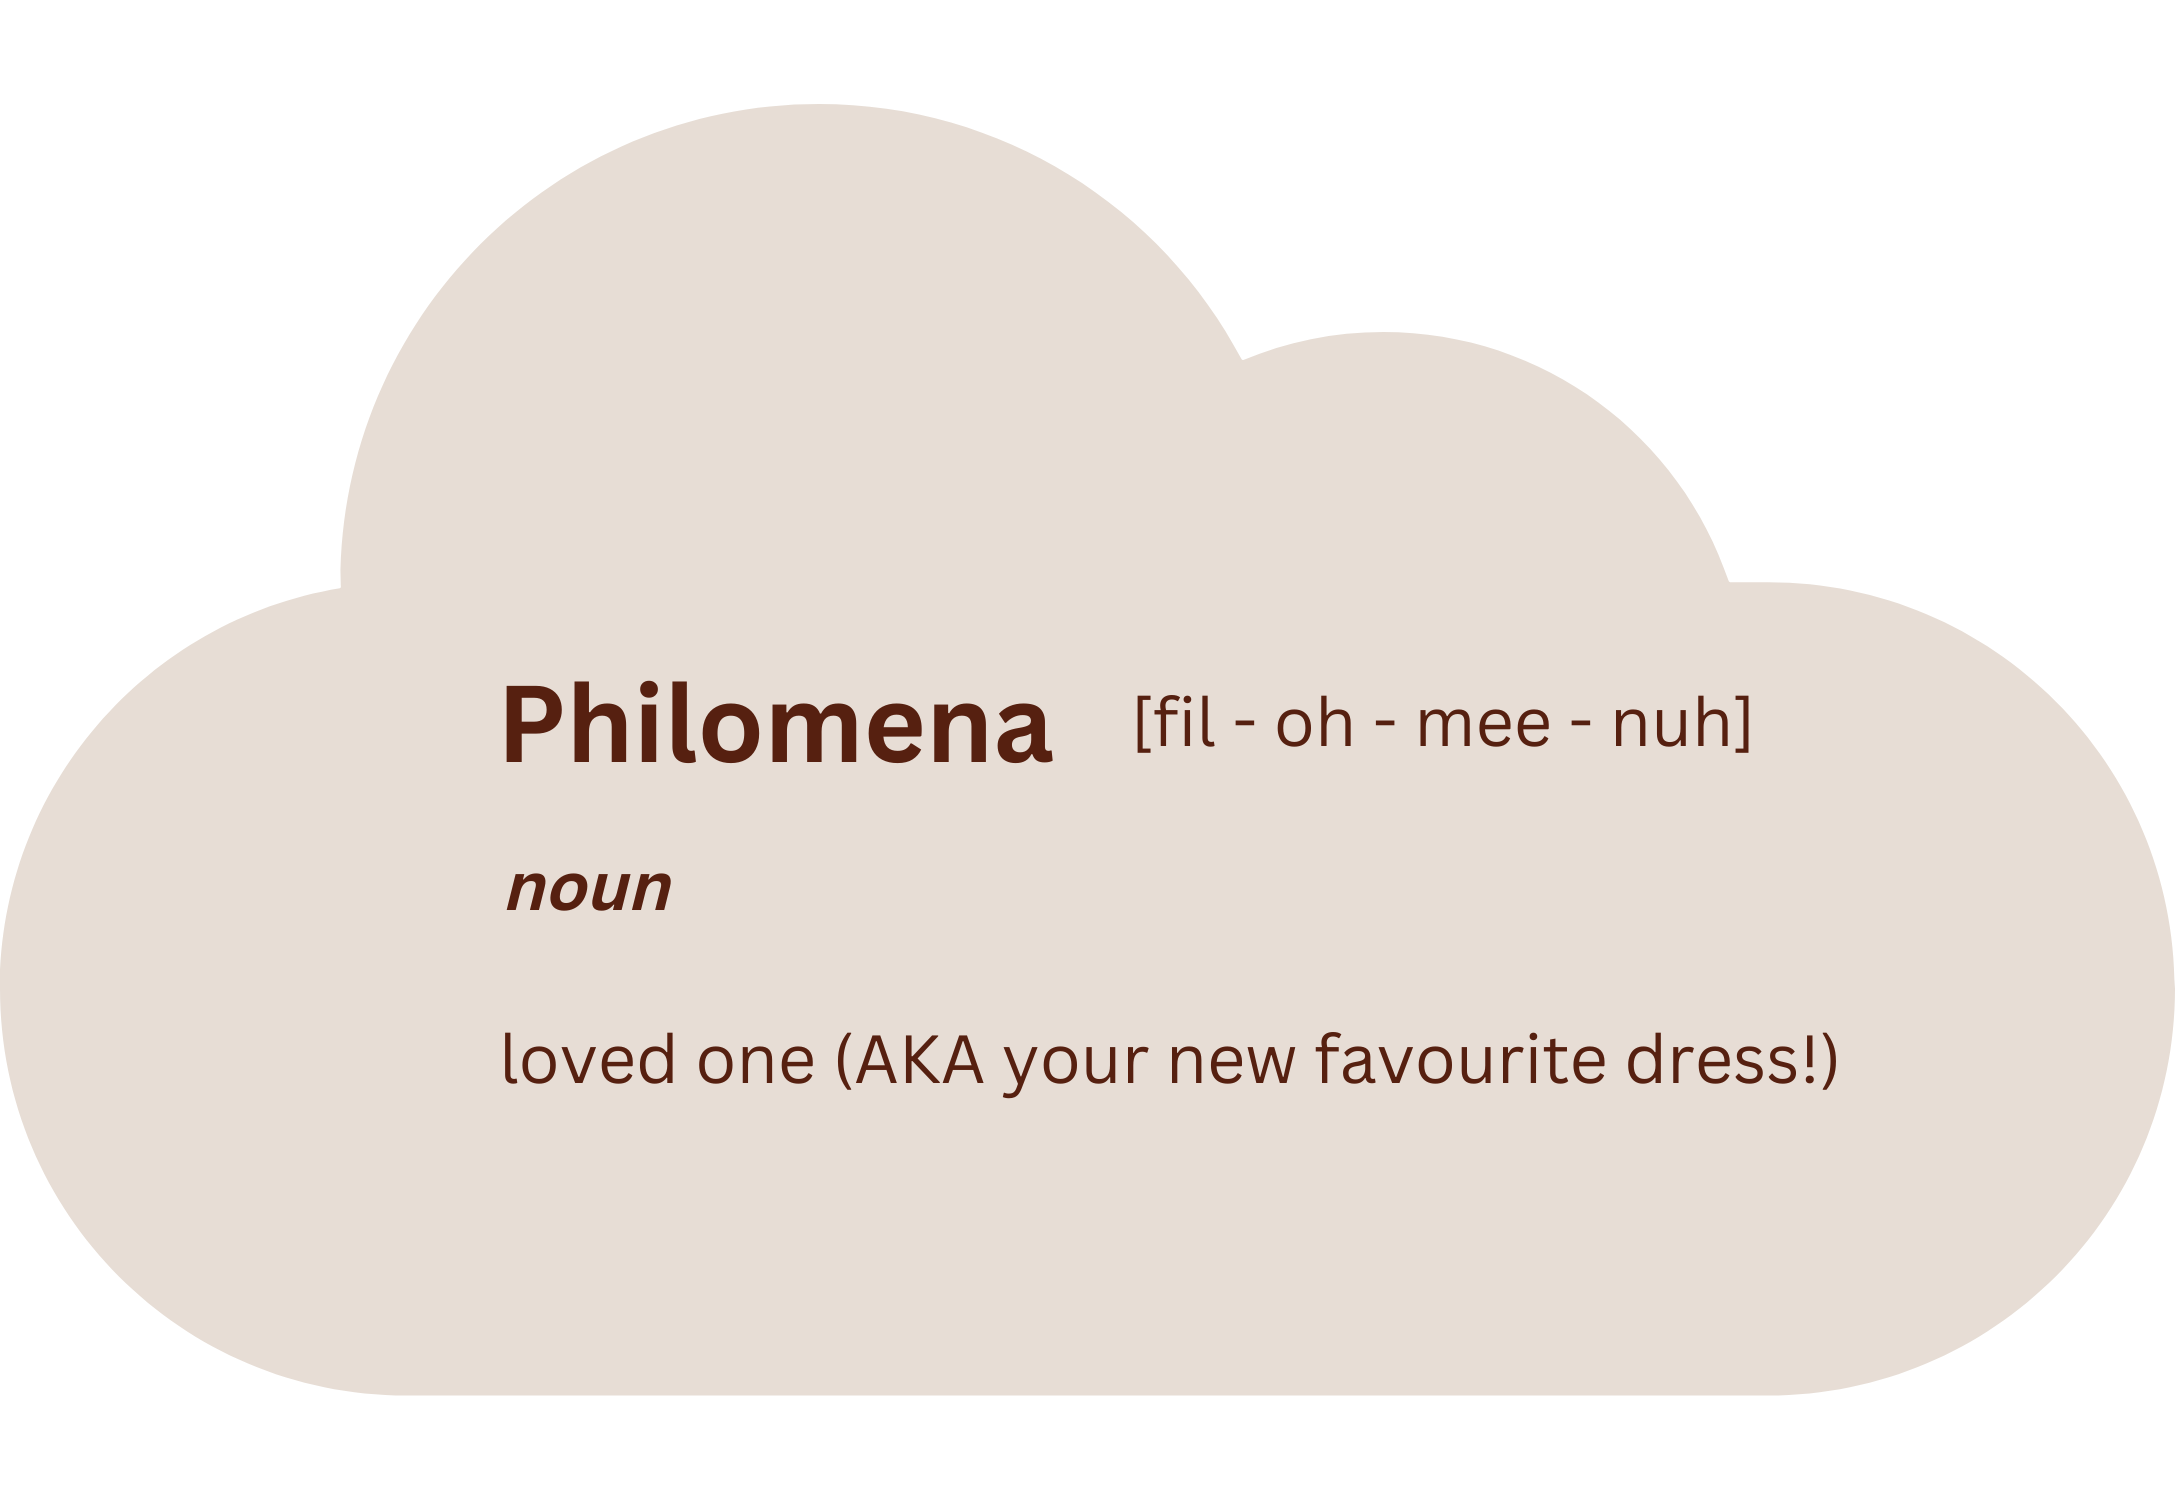 Philomena - Your new favourite dress!